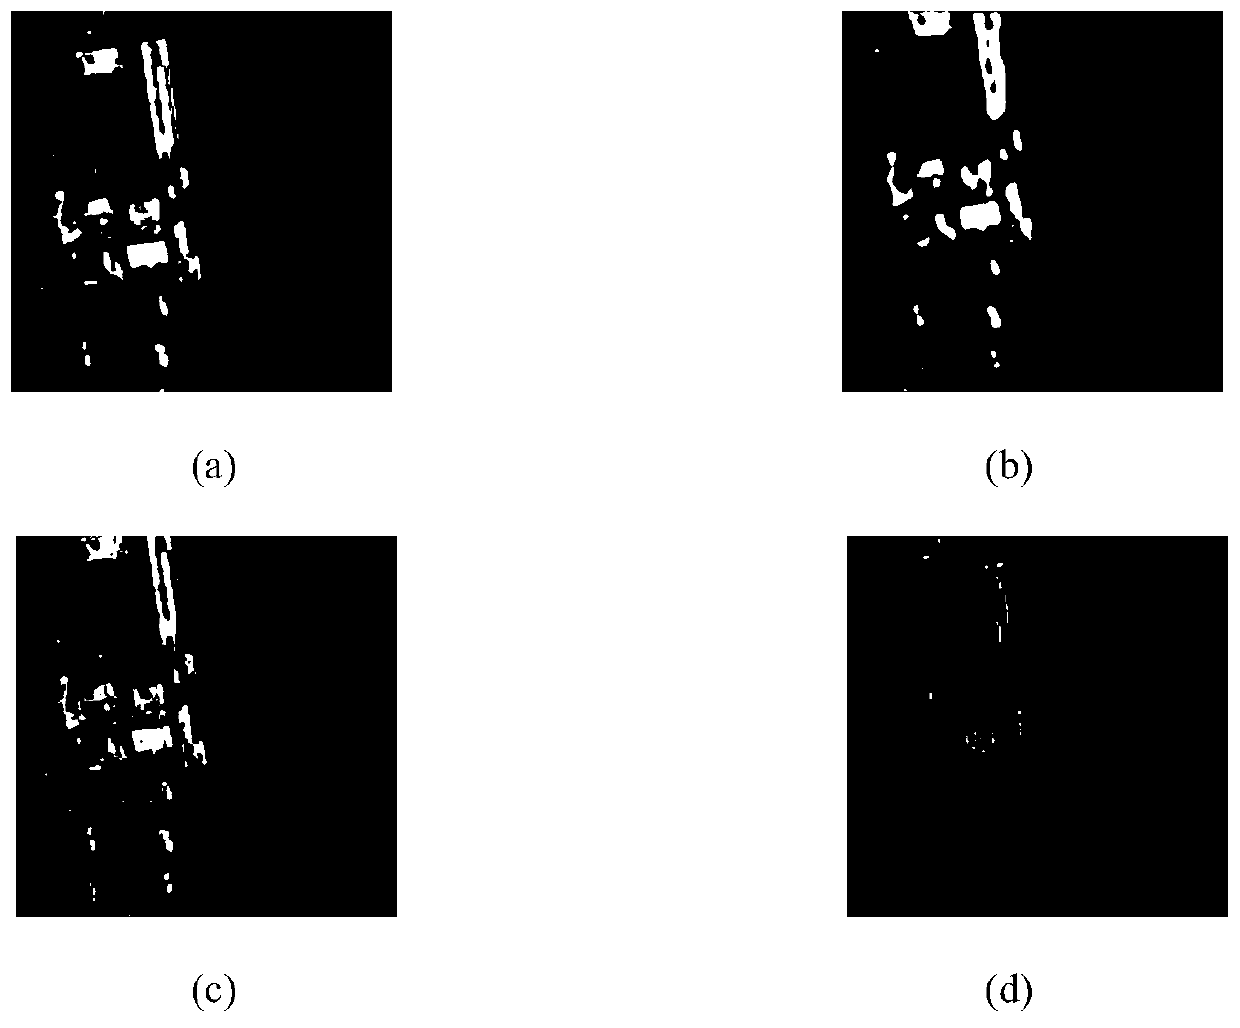 Pansharking method for gray scale amplitude modulation based on spectrum mapping